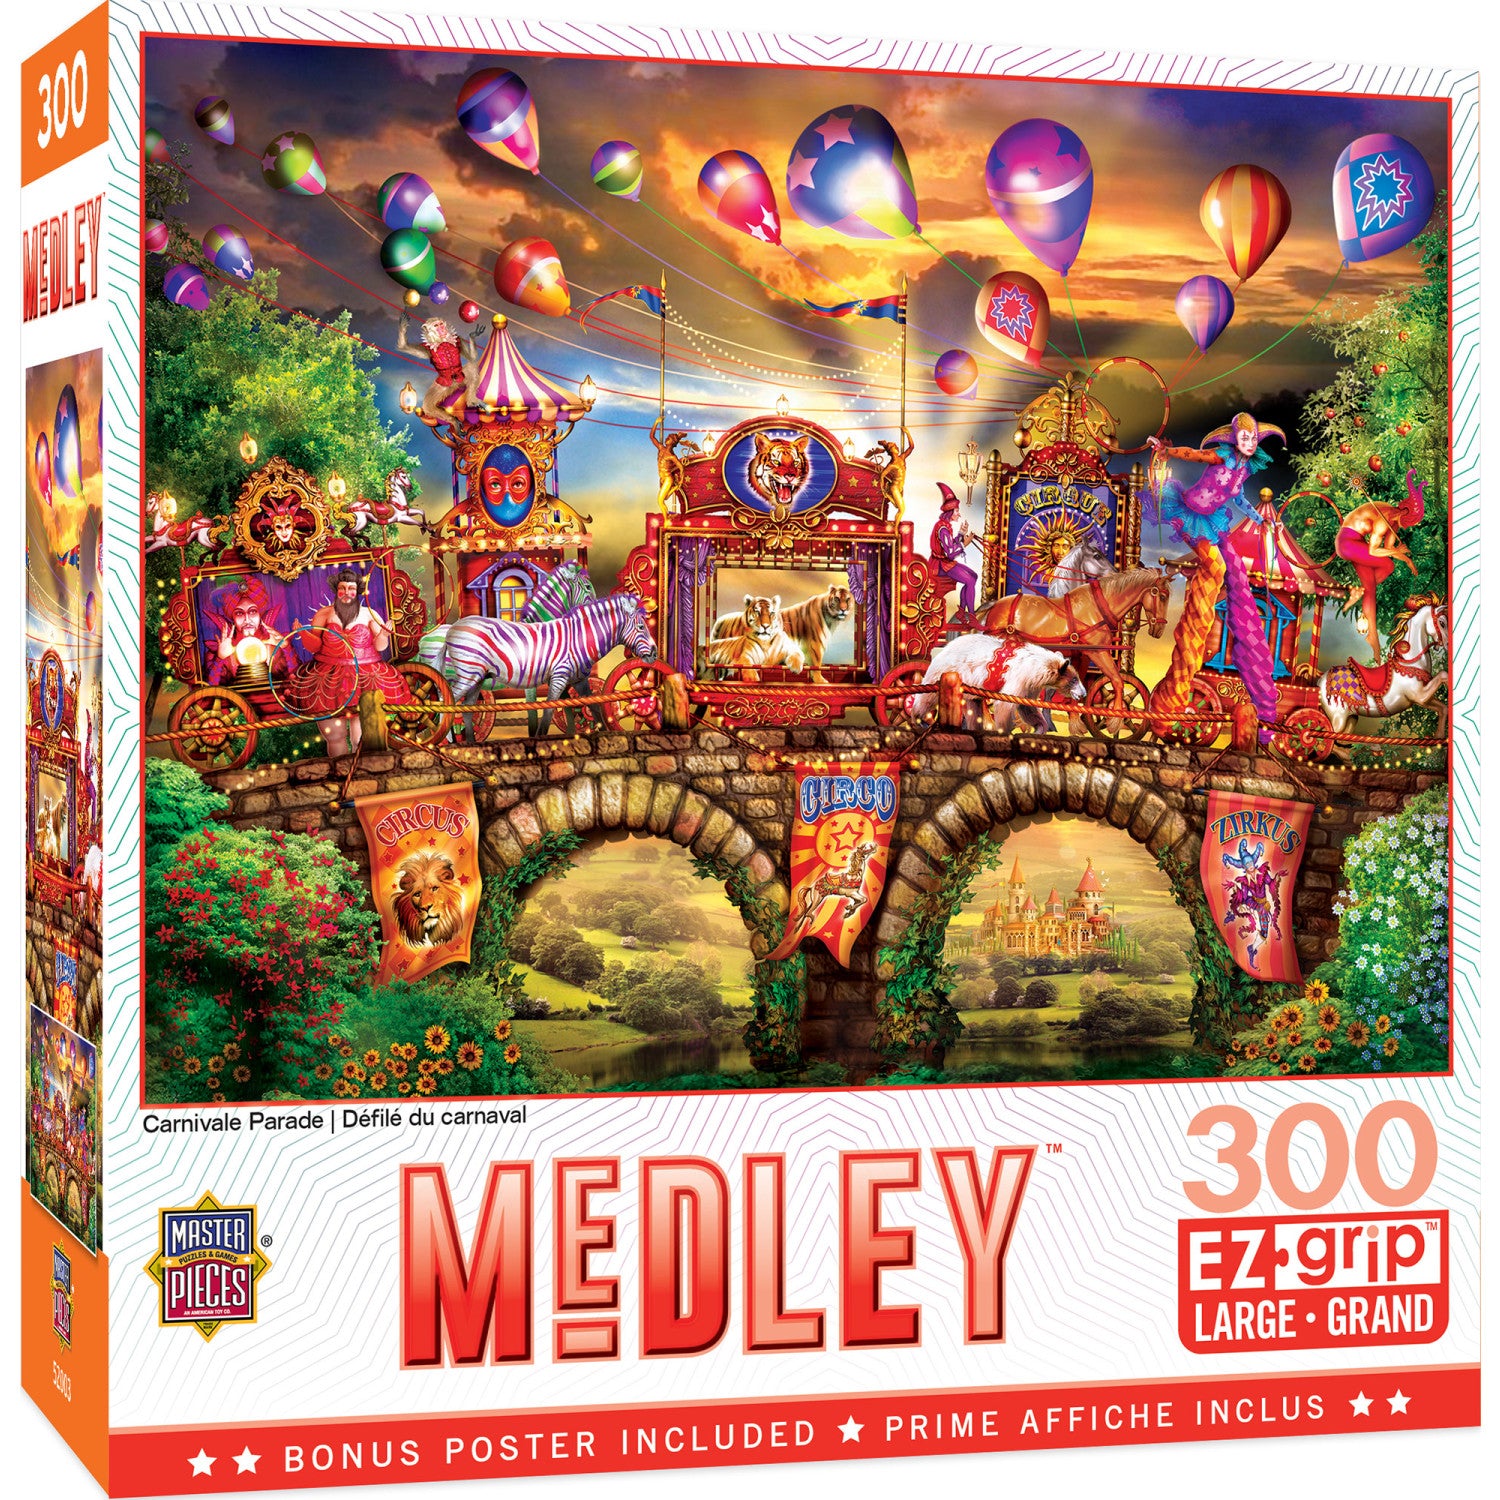 Medley - Carnivale Parade 300 Piece EZ Grip Jigsaw Puzzle